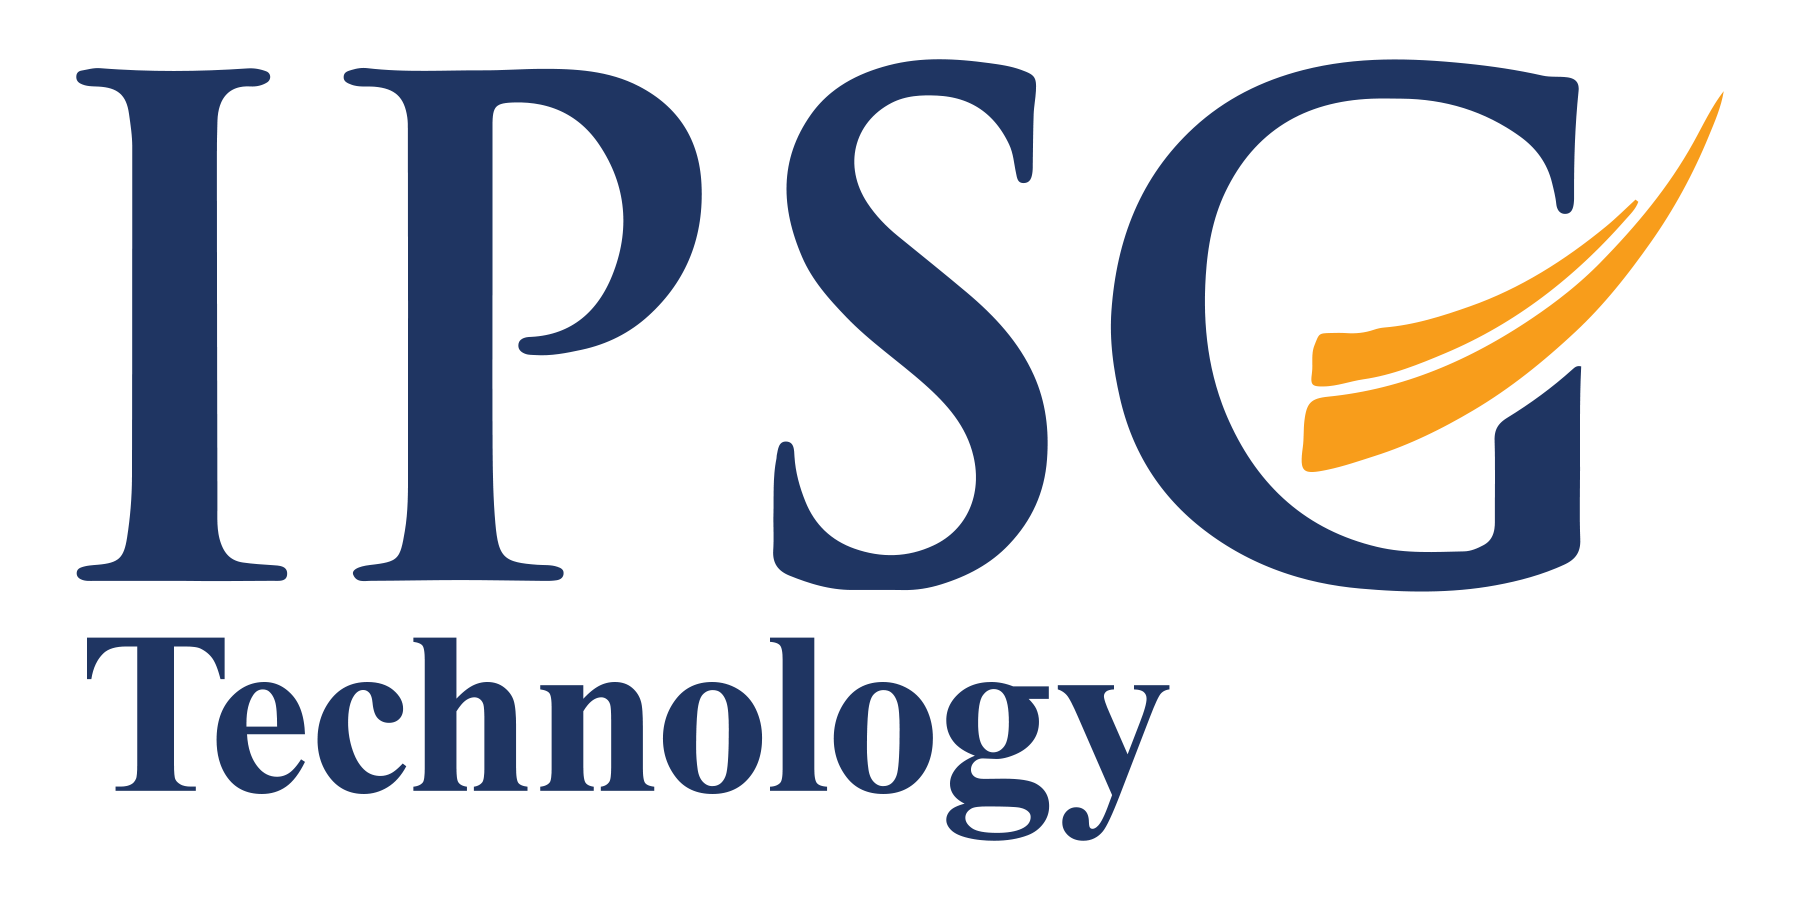 IPSG Technology Inc.